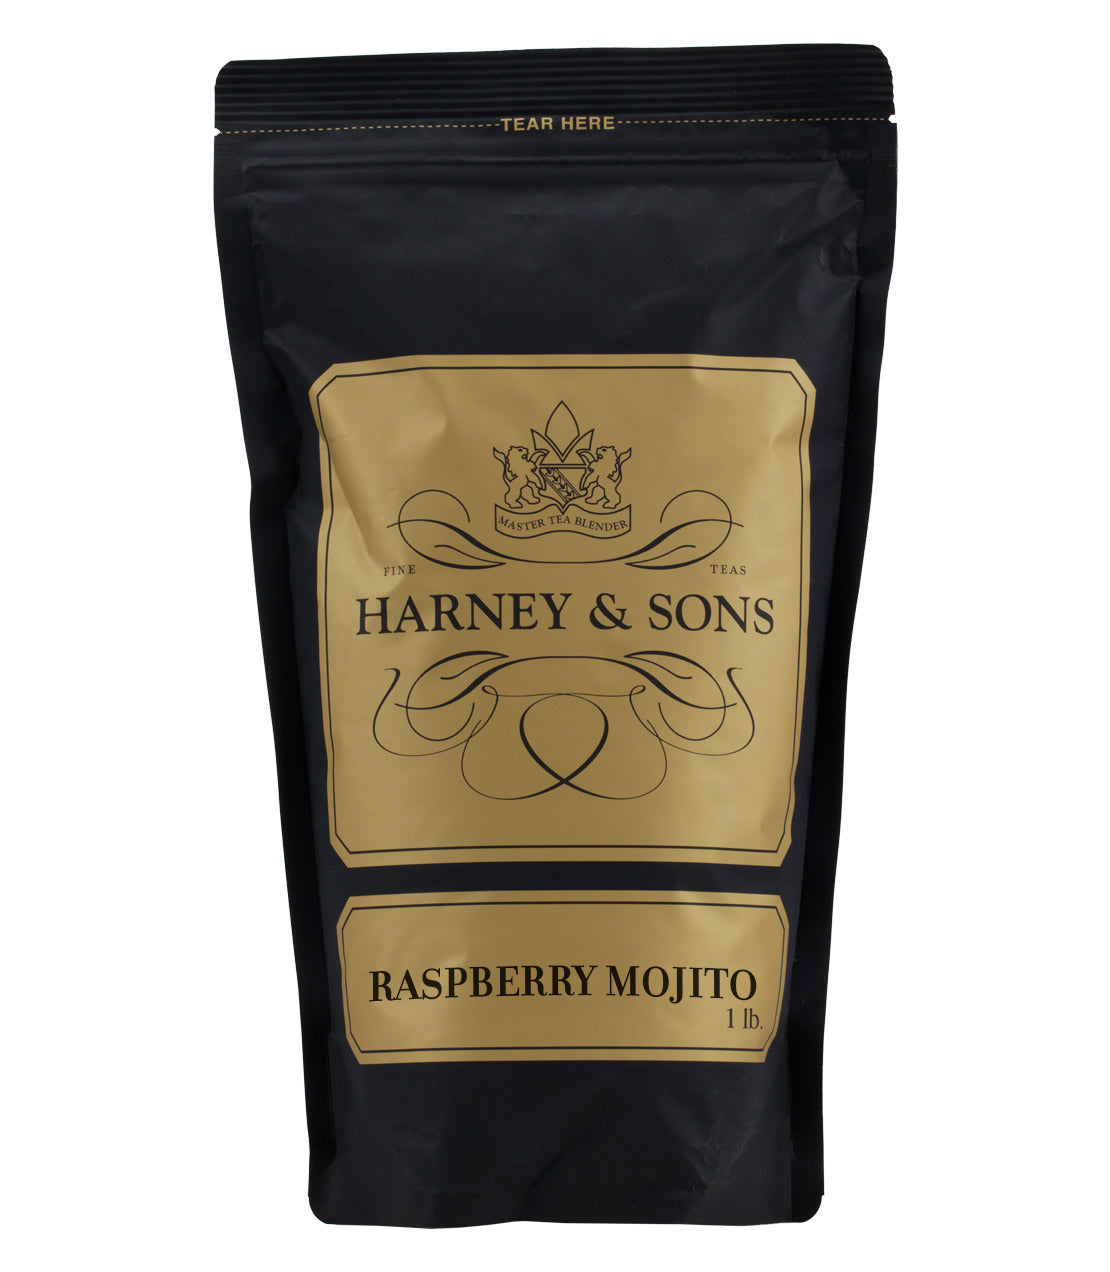 Raspberry Mojito - Loose 1 lb. Bag - Harney & Sons Fine Teas